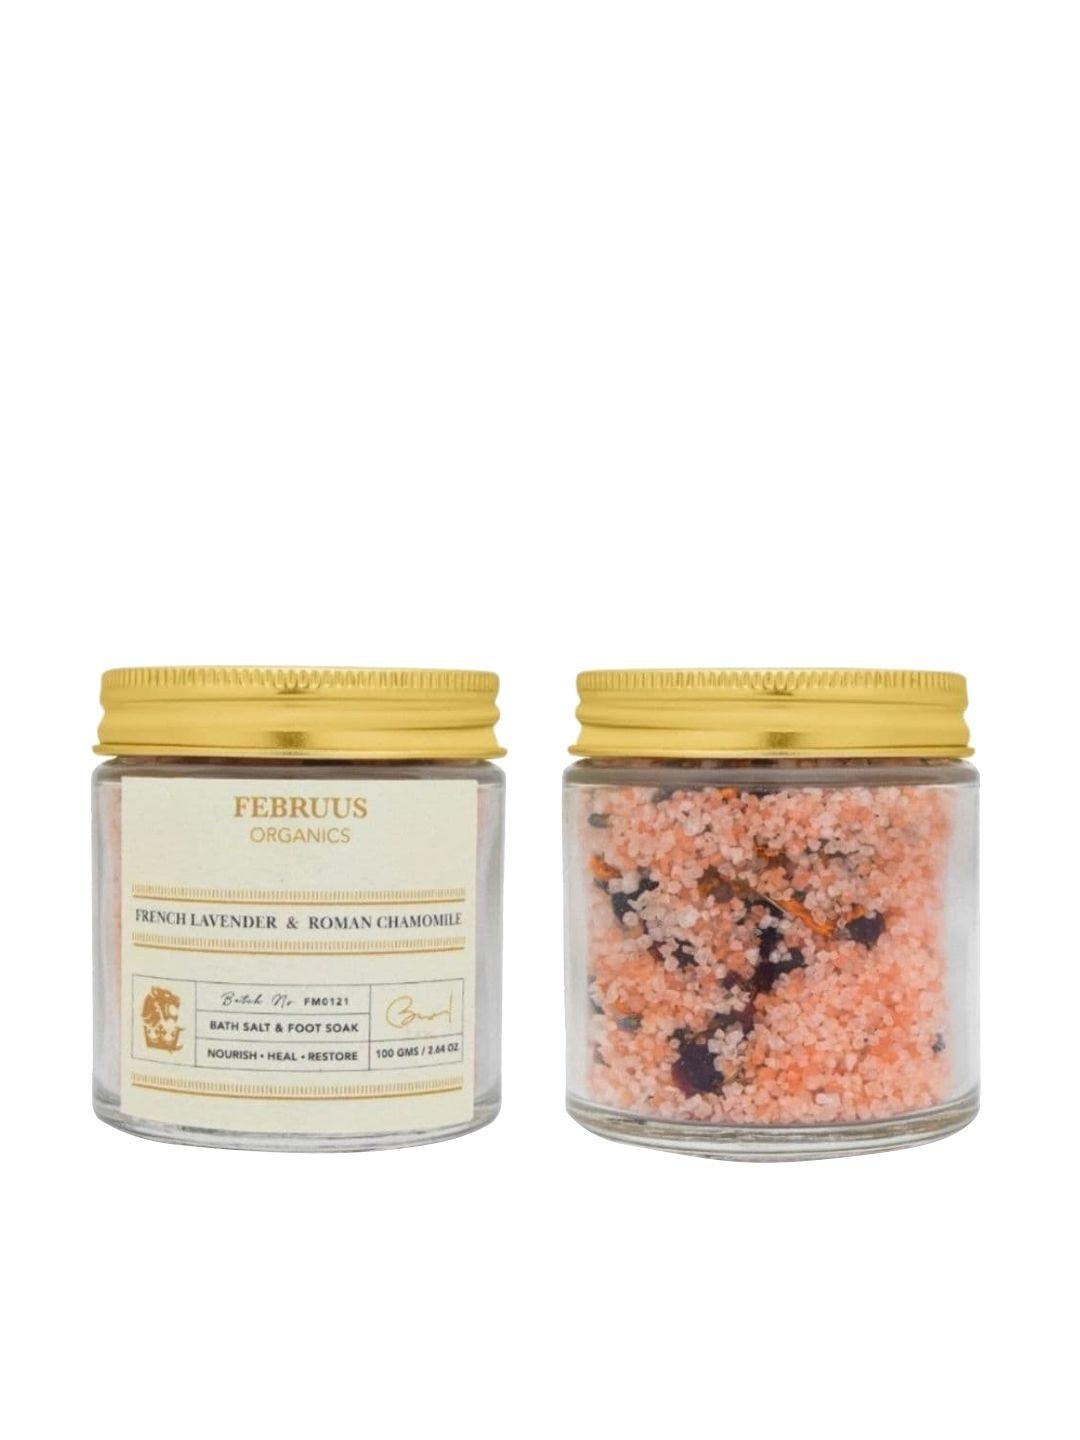 februus organics bath salt - french lavender & roman chamomile - 100 g